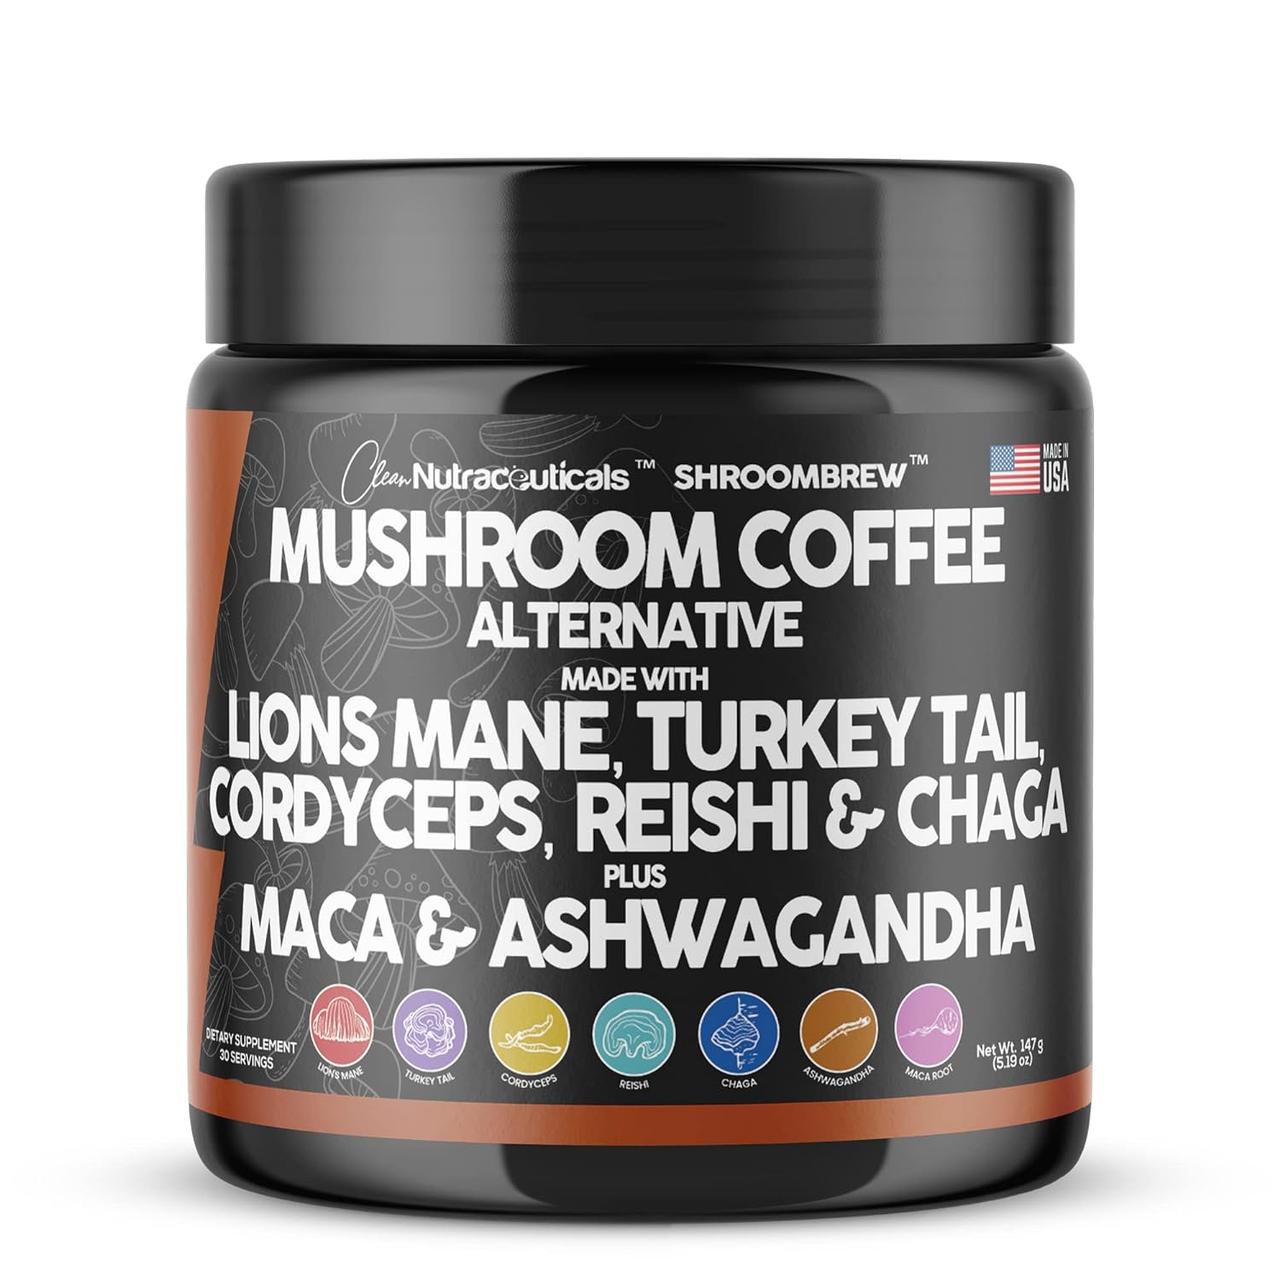 Преміальна домішка грибної альтернативної кави Clean Nutraceuticals Mushroom Coffee Alternative Mix — Maca